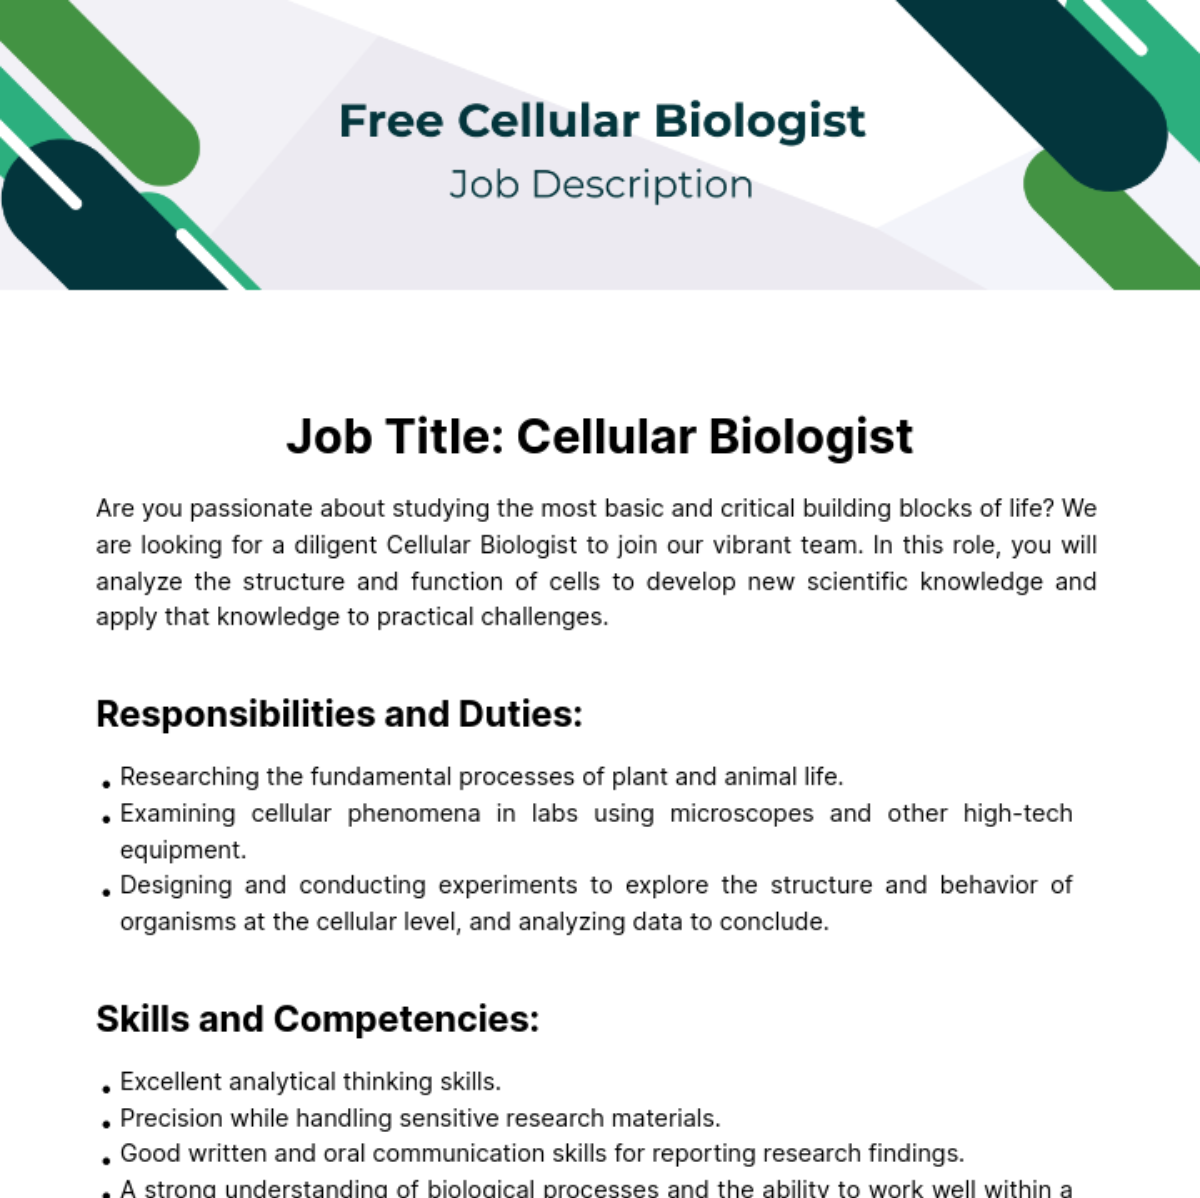 Free Cellular Biologist Job Description Template